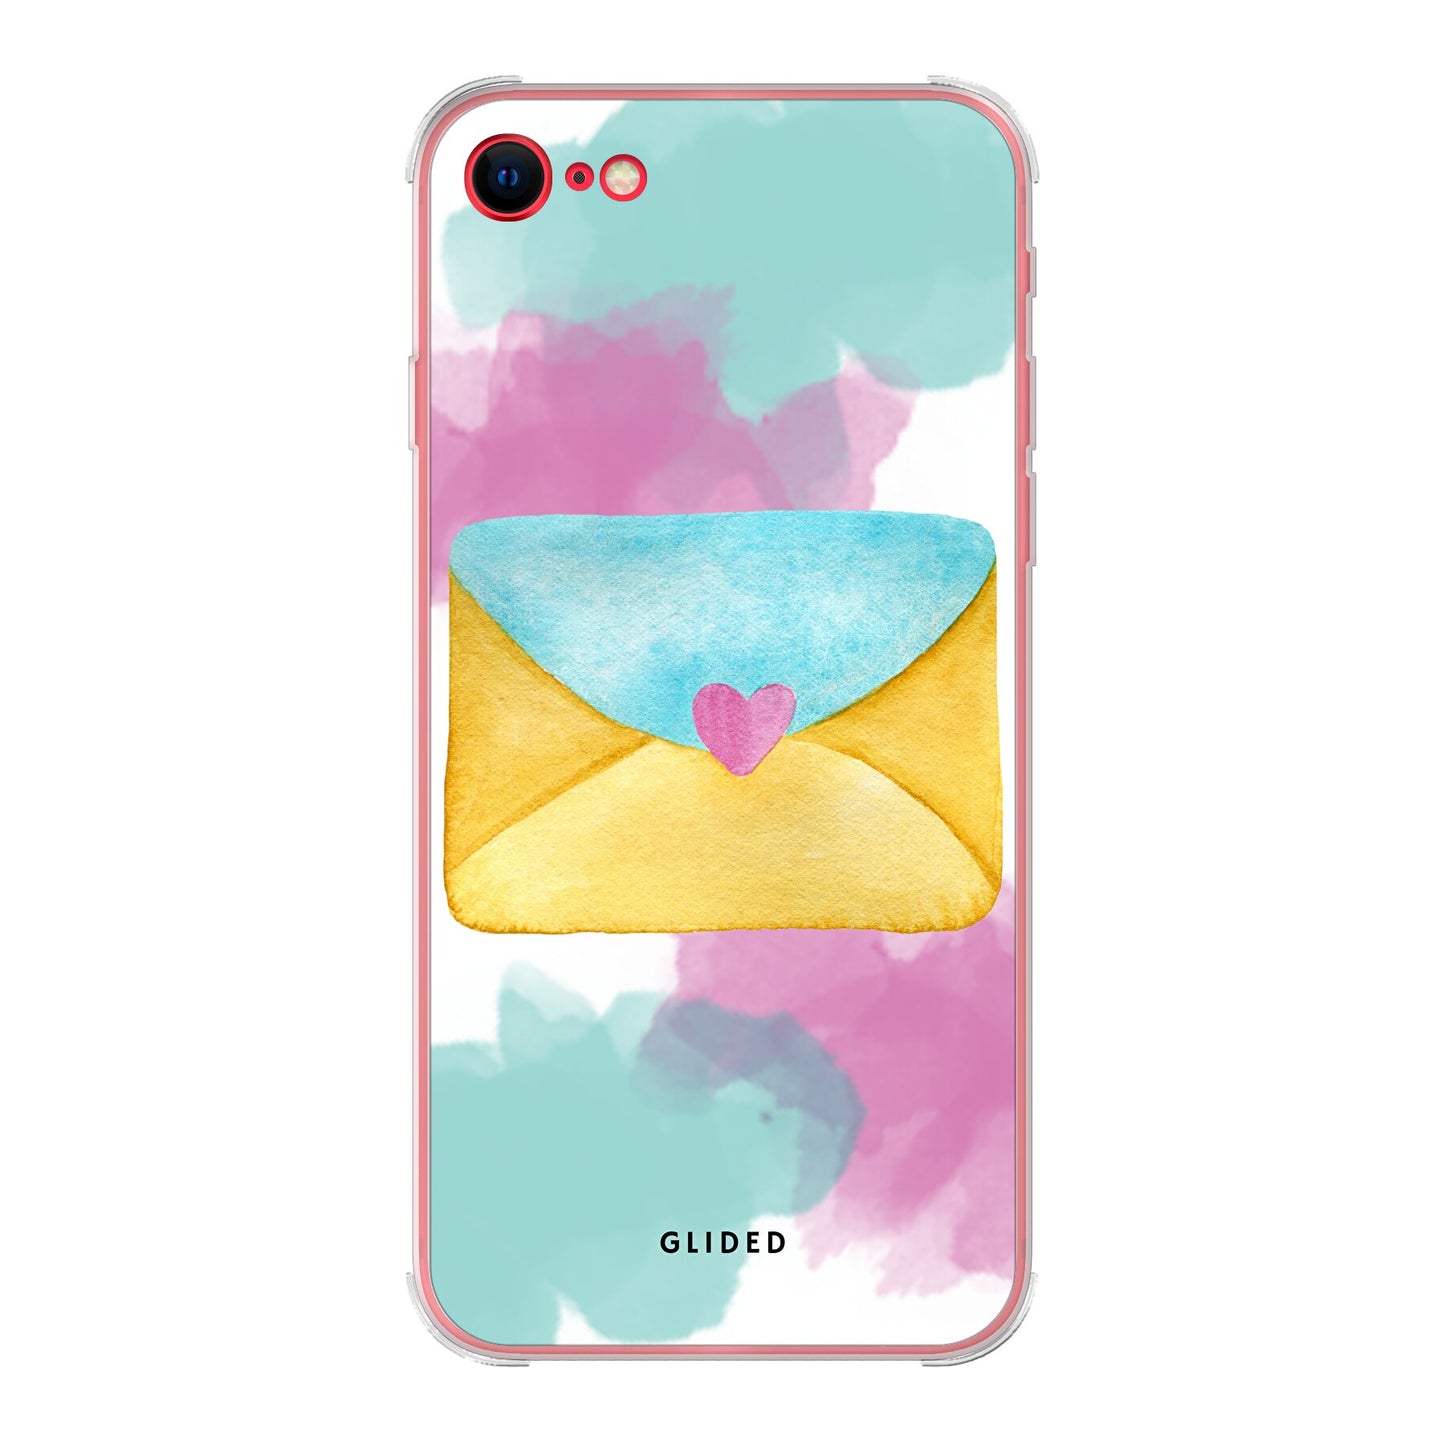 Envelope - iPhone 7 - Bumper case